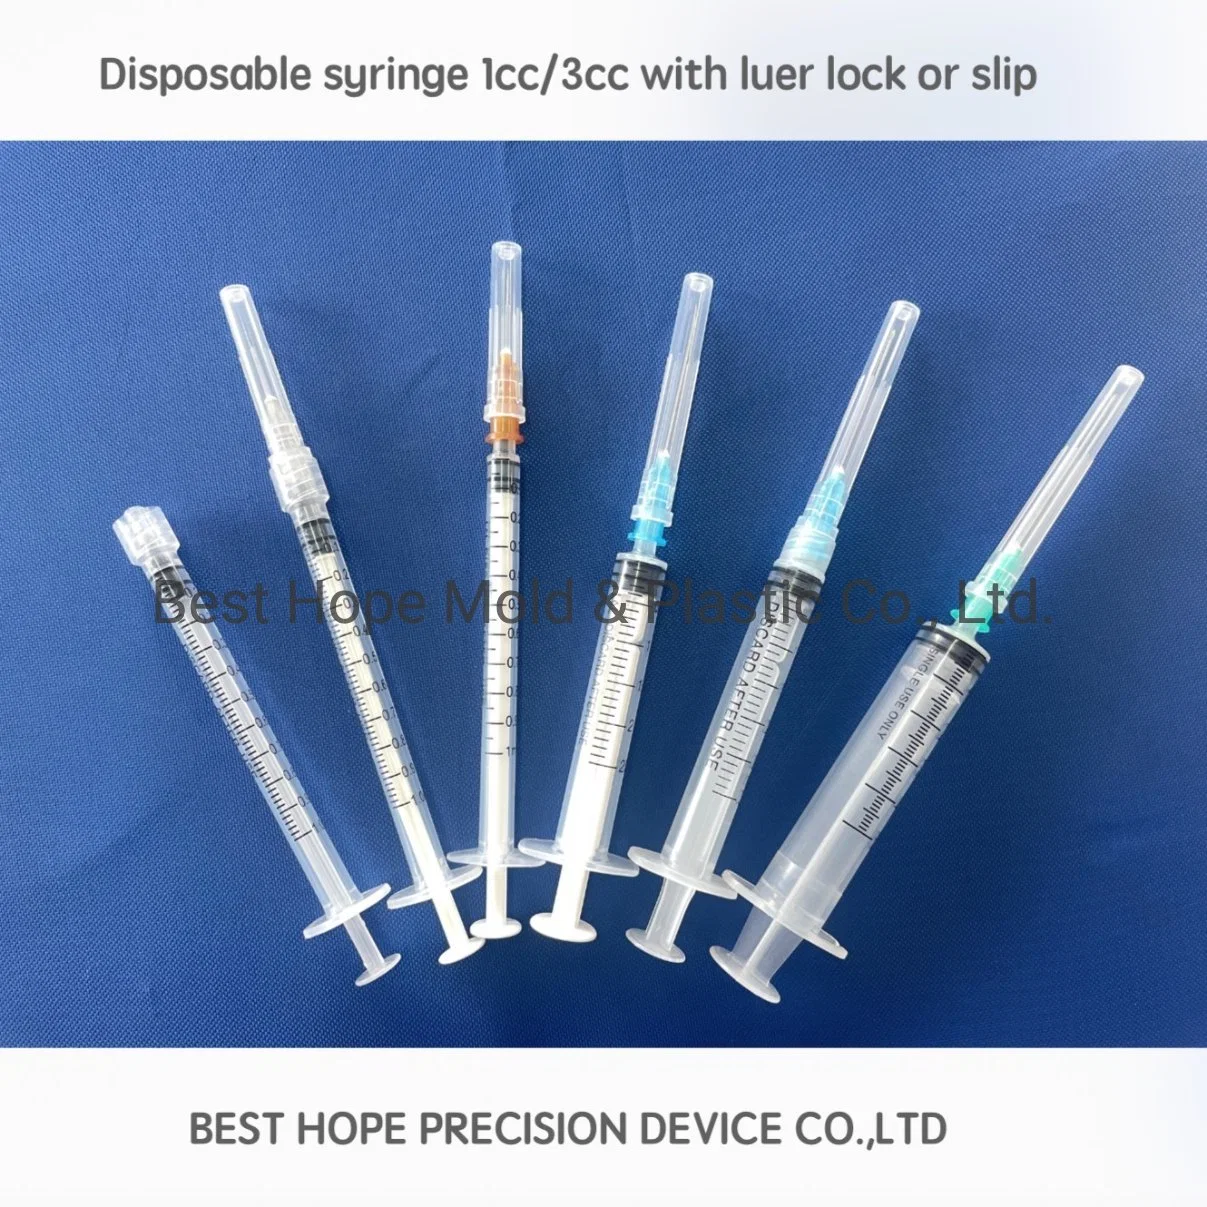 2 Part or 3part Medical Disposable 1ml Syringe Mold, Safety Syringe, High Quality, Short Delivery